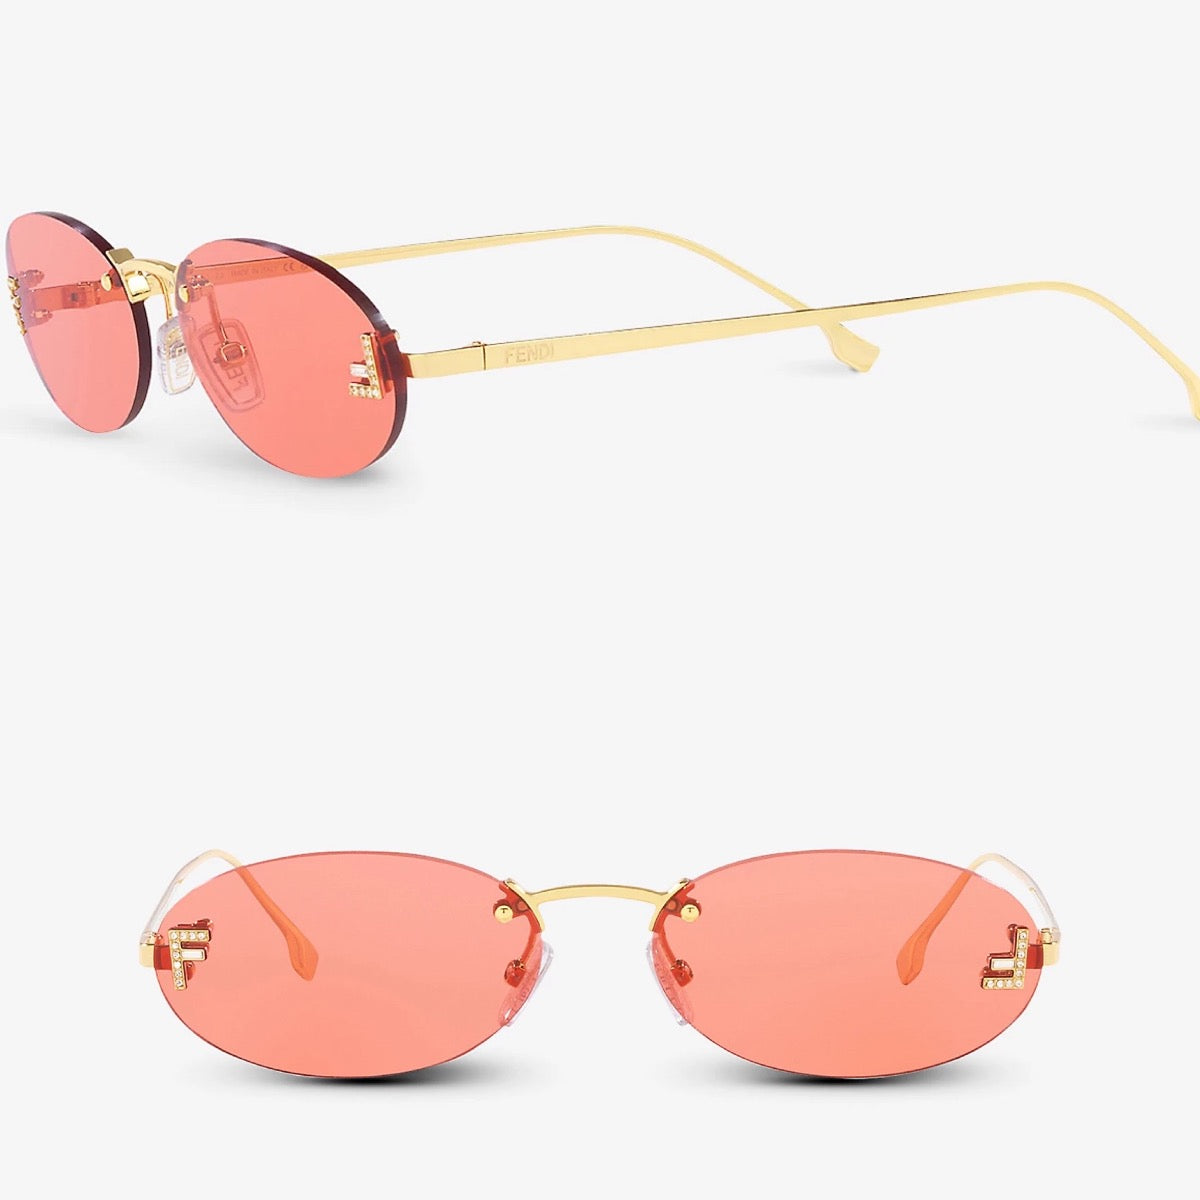 Fendi - rimless oval sunglasses - red